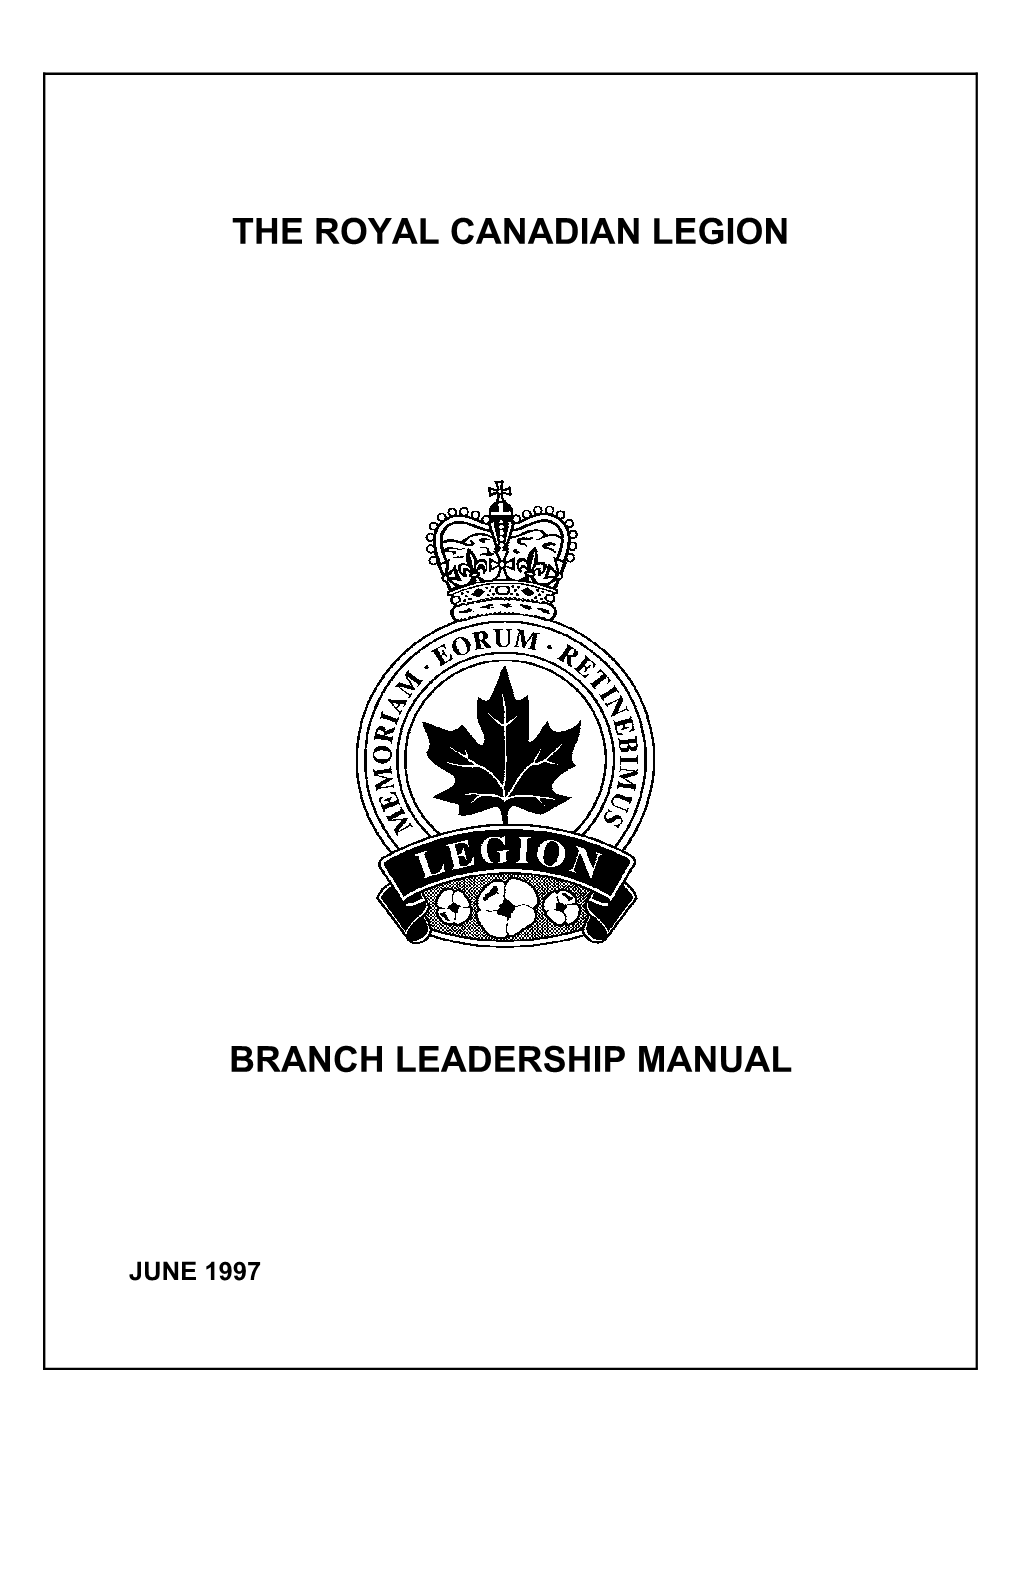 The Royal Canadian Legion Branch Leadership Manual